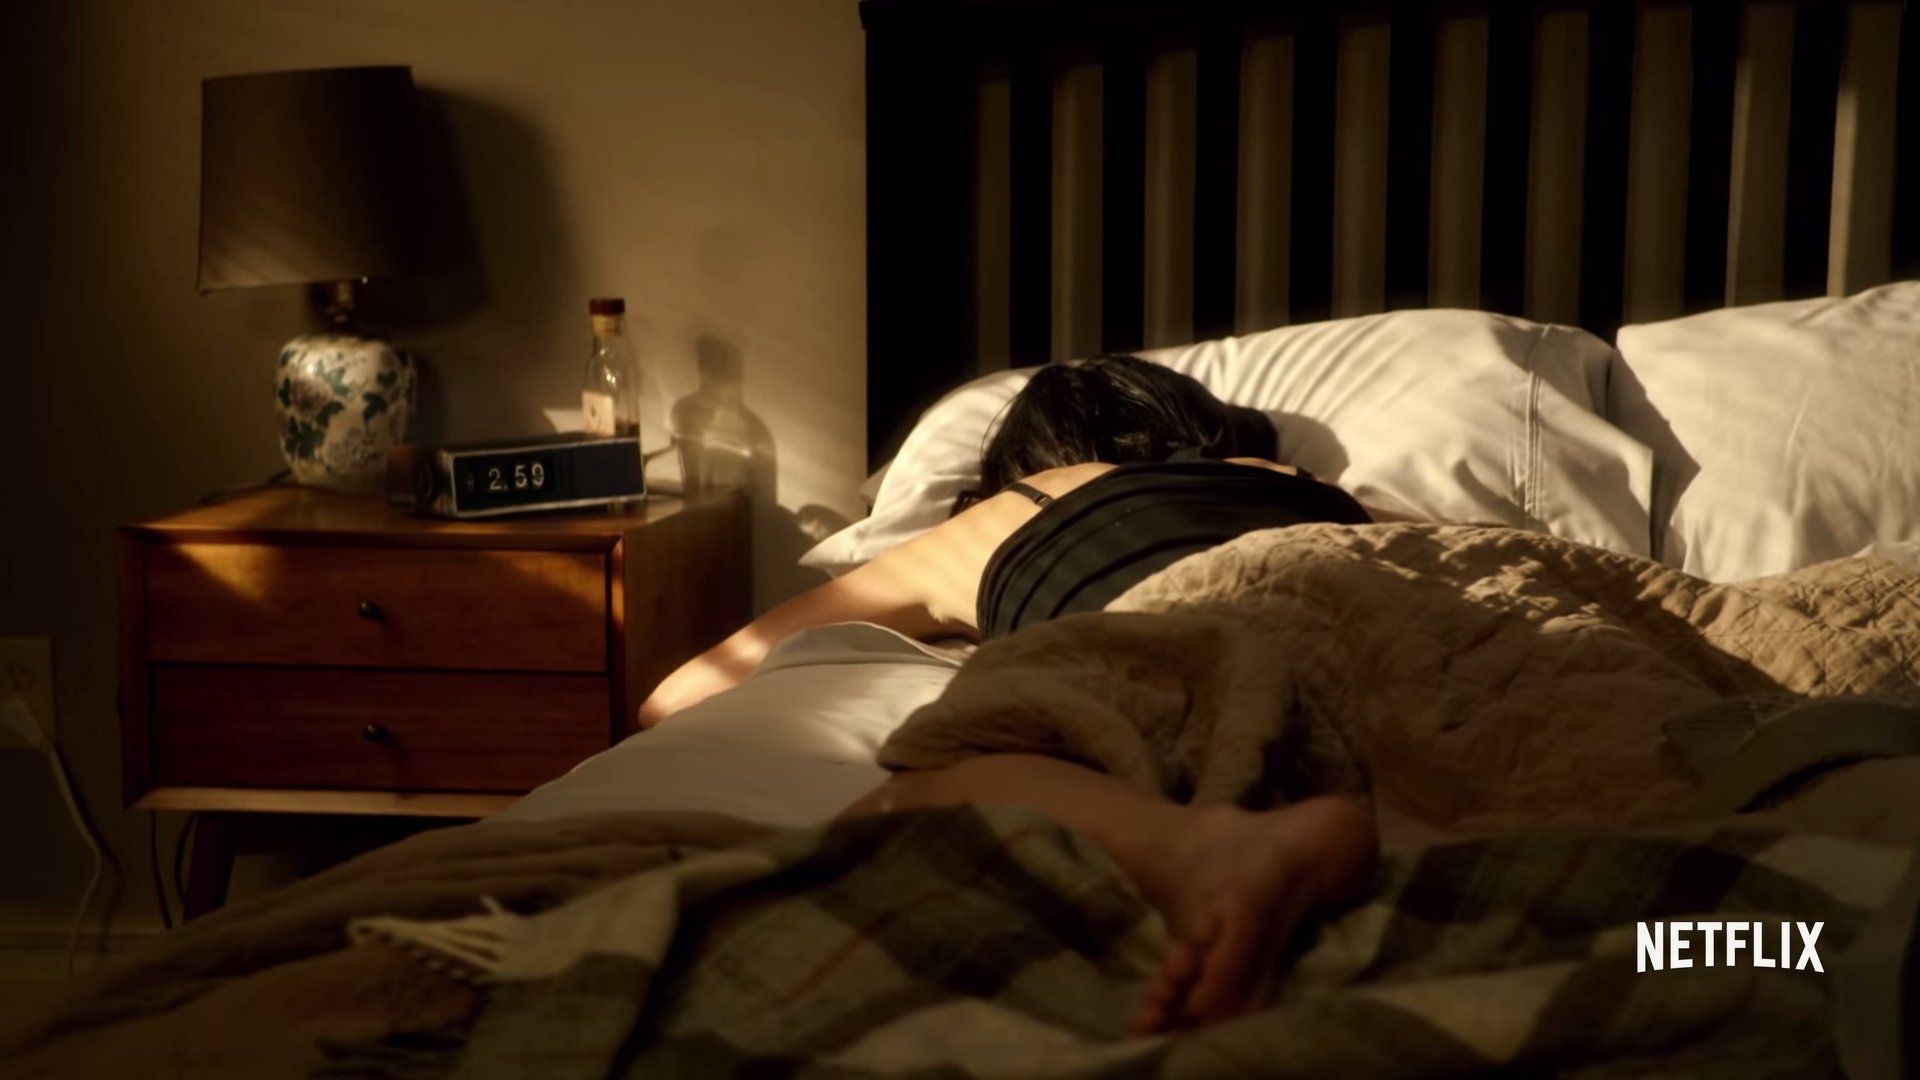 Jessica Jones Missouri Jessica Jones Netflix Trailer In Full Nudity Everywhere